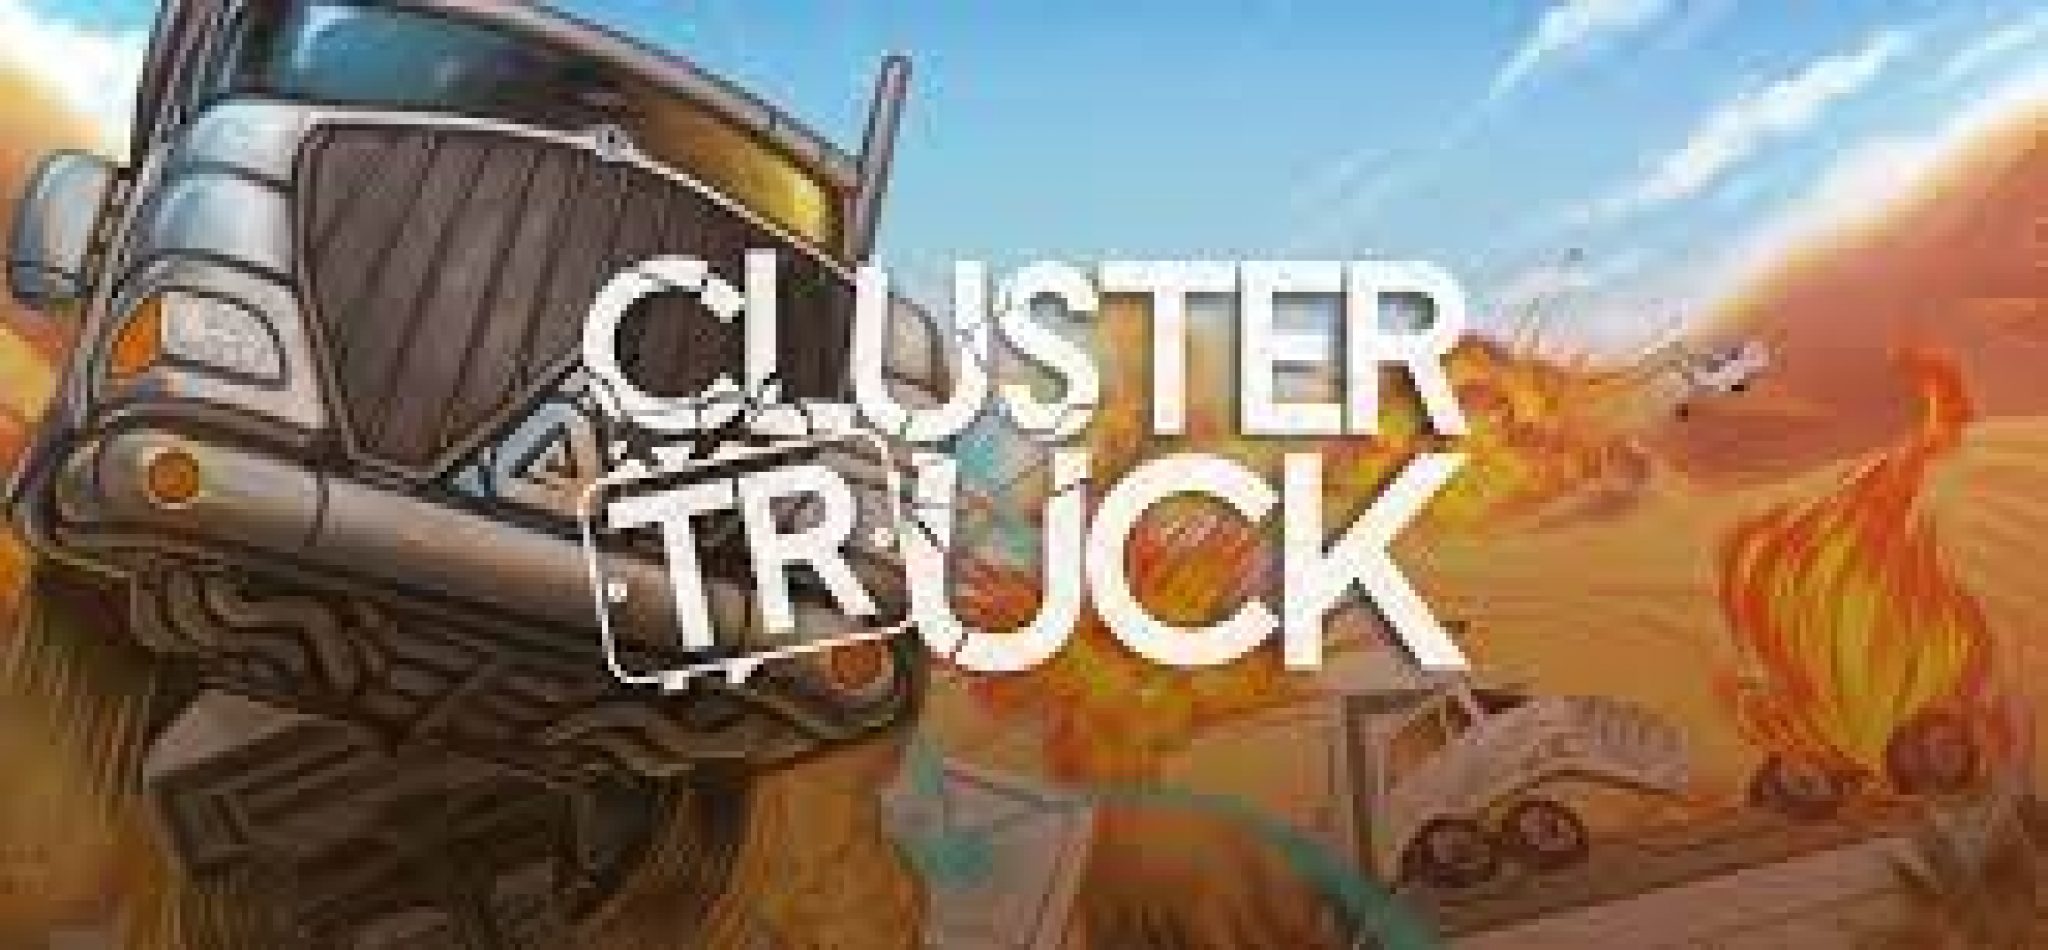 clustertruck free